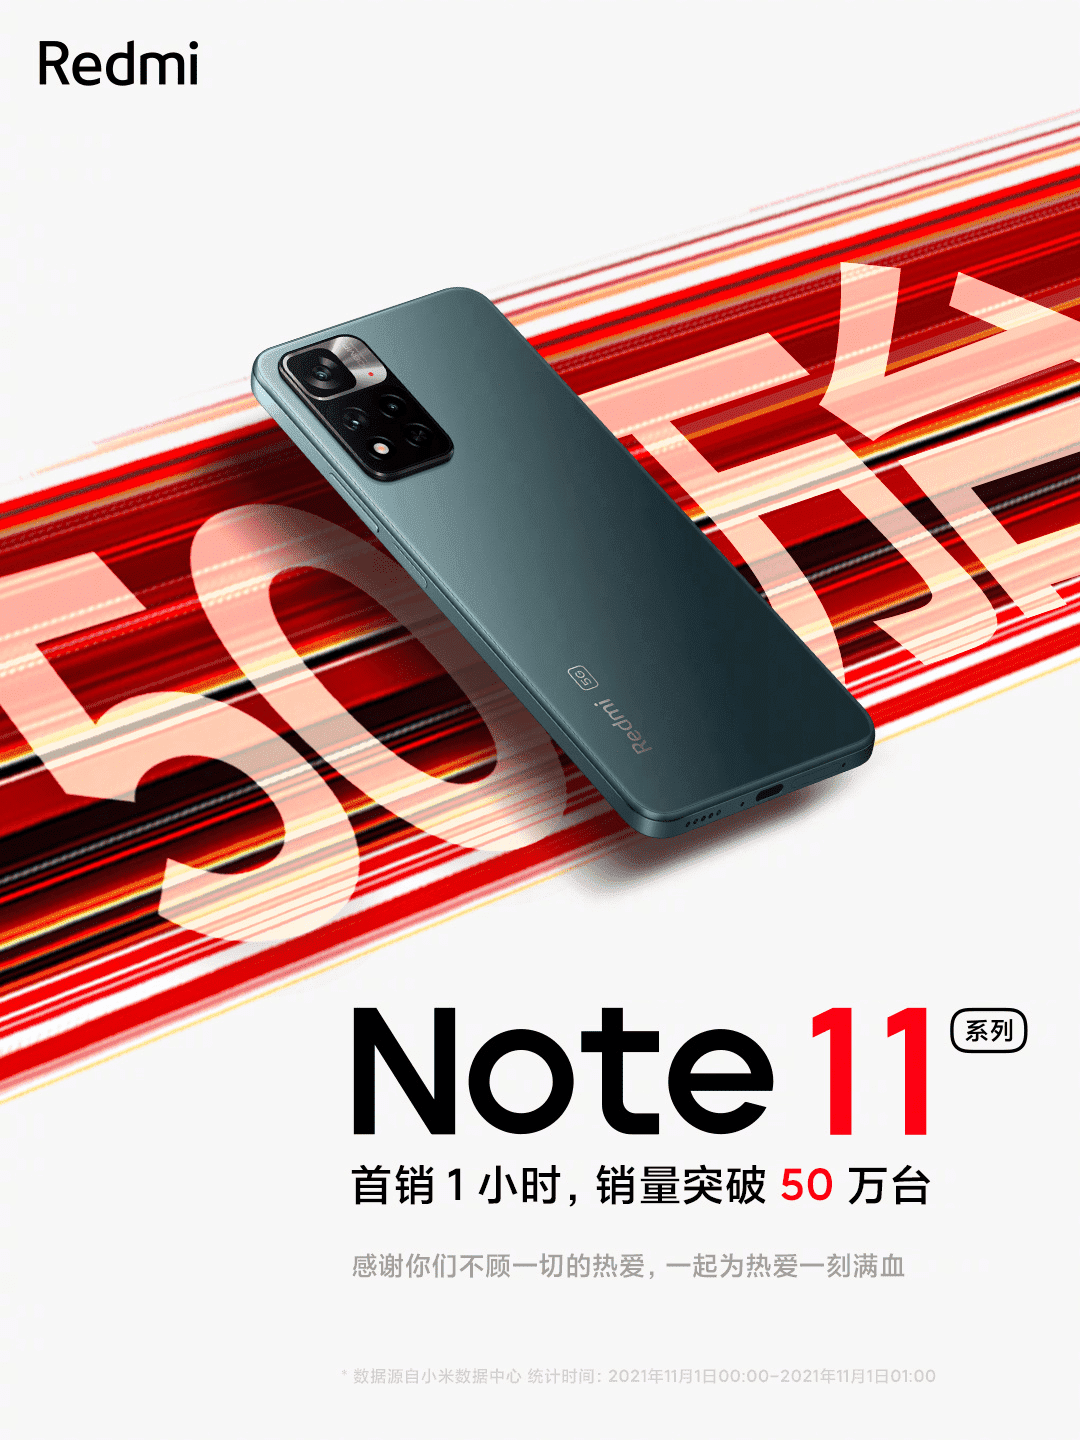 Redmi Note 11 серия